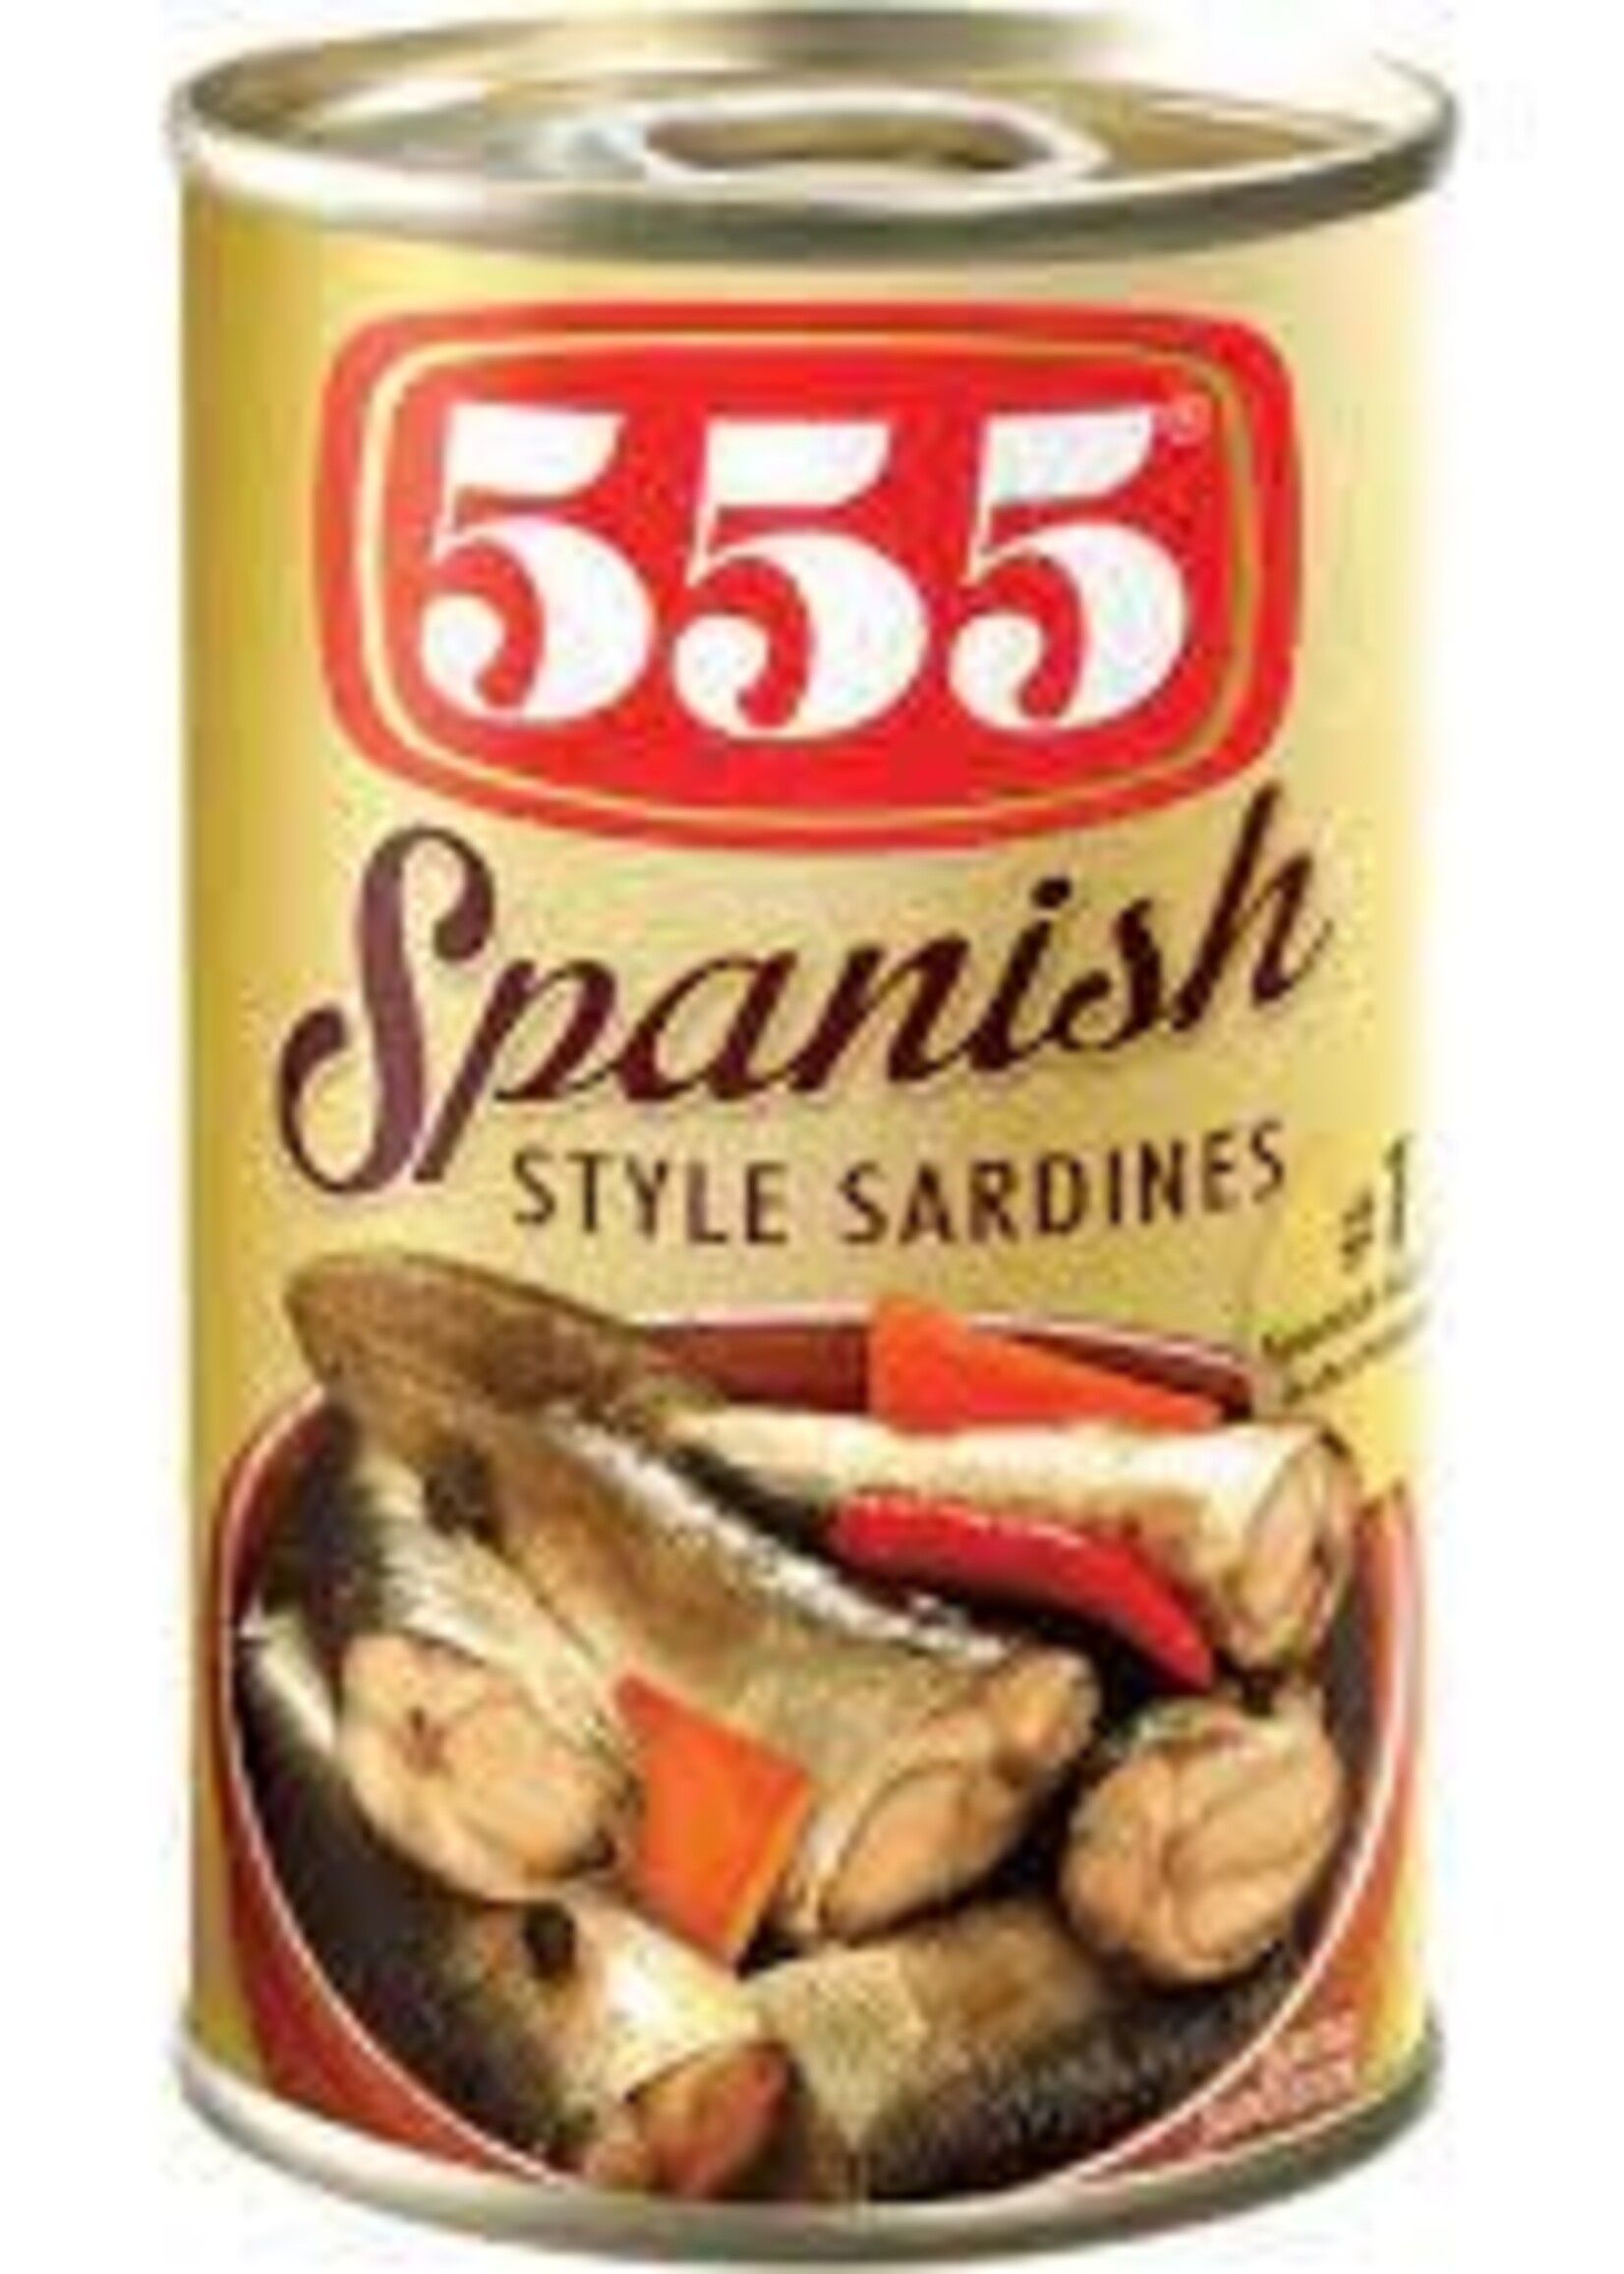 555 Sardines Spanish Style 155g